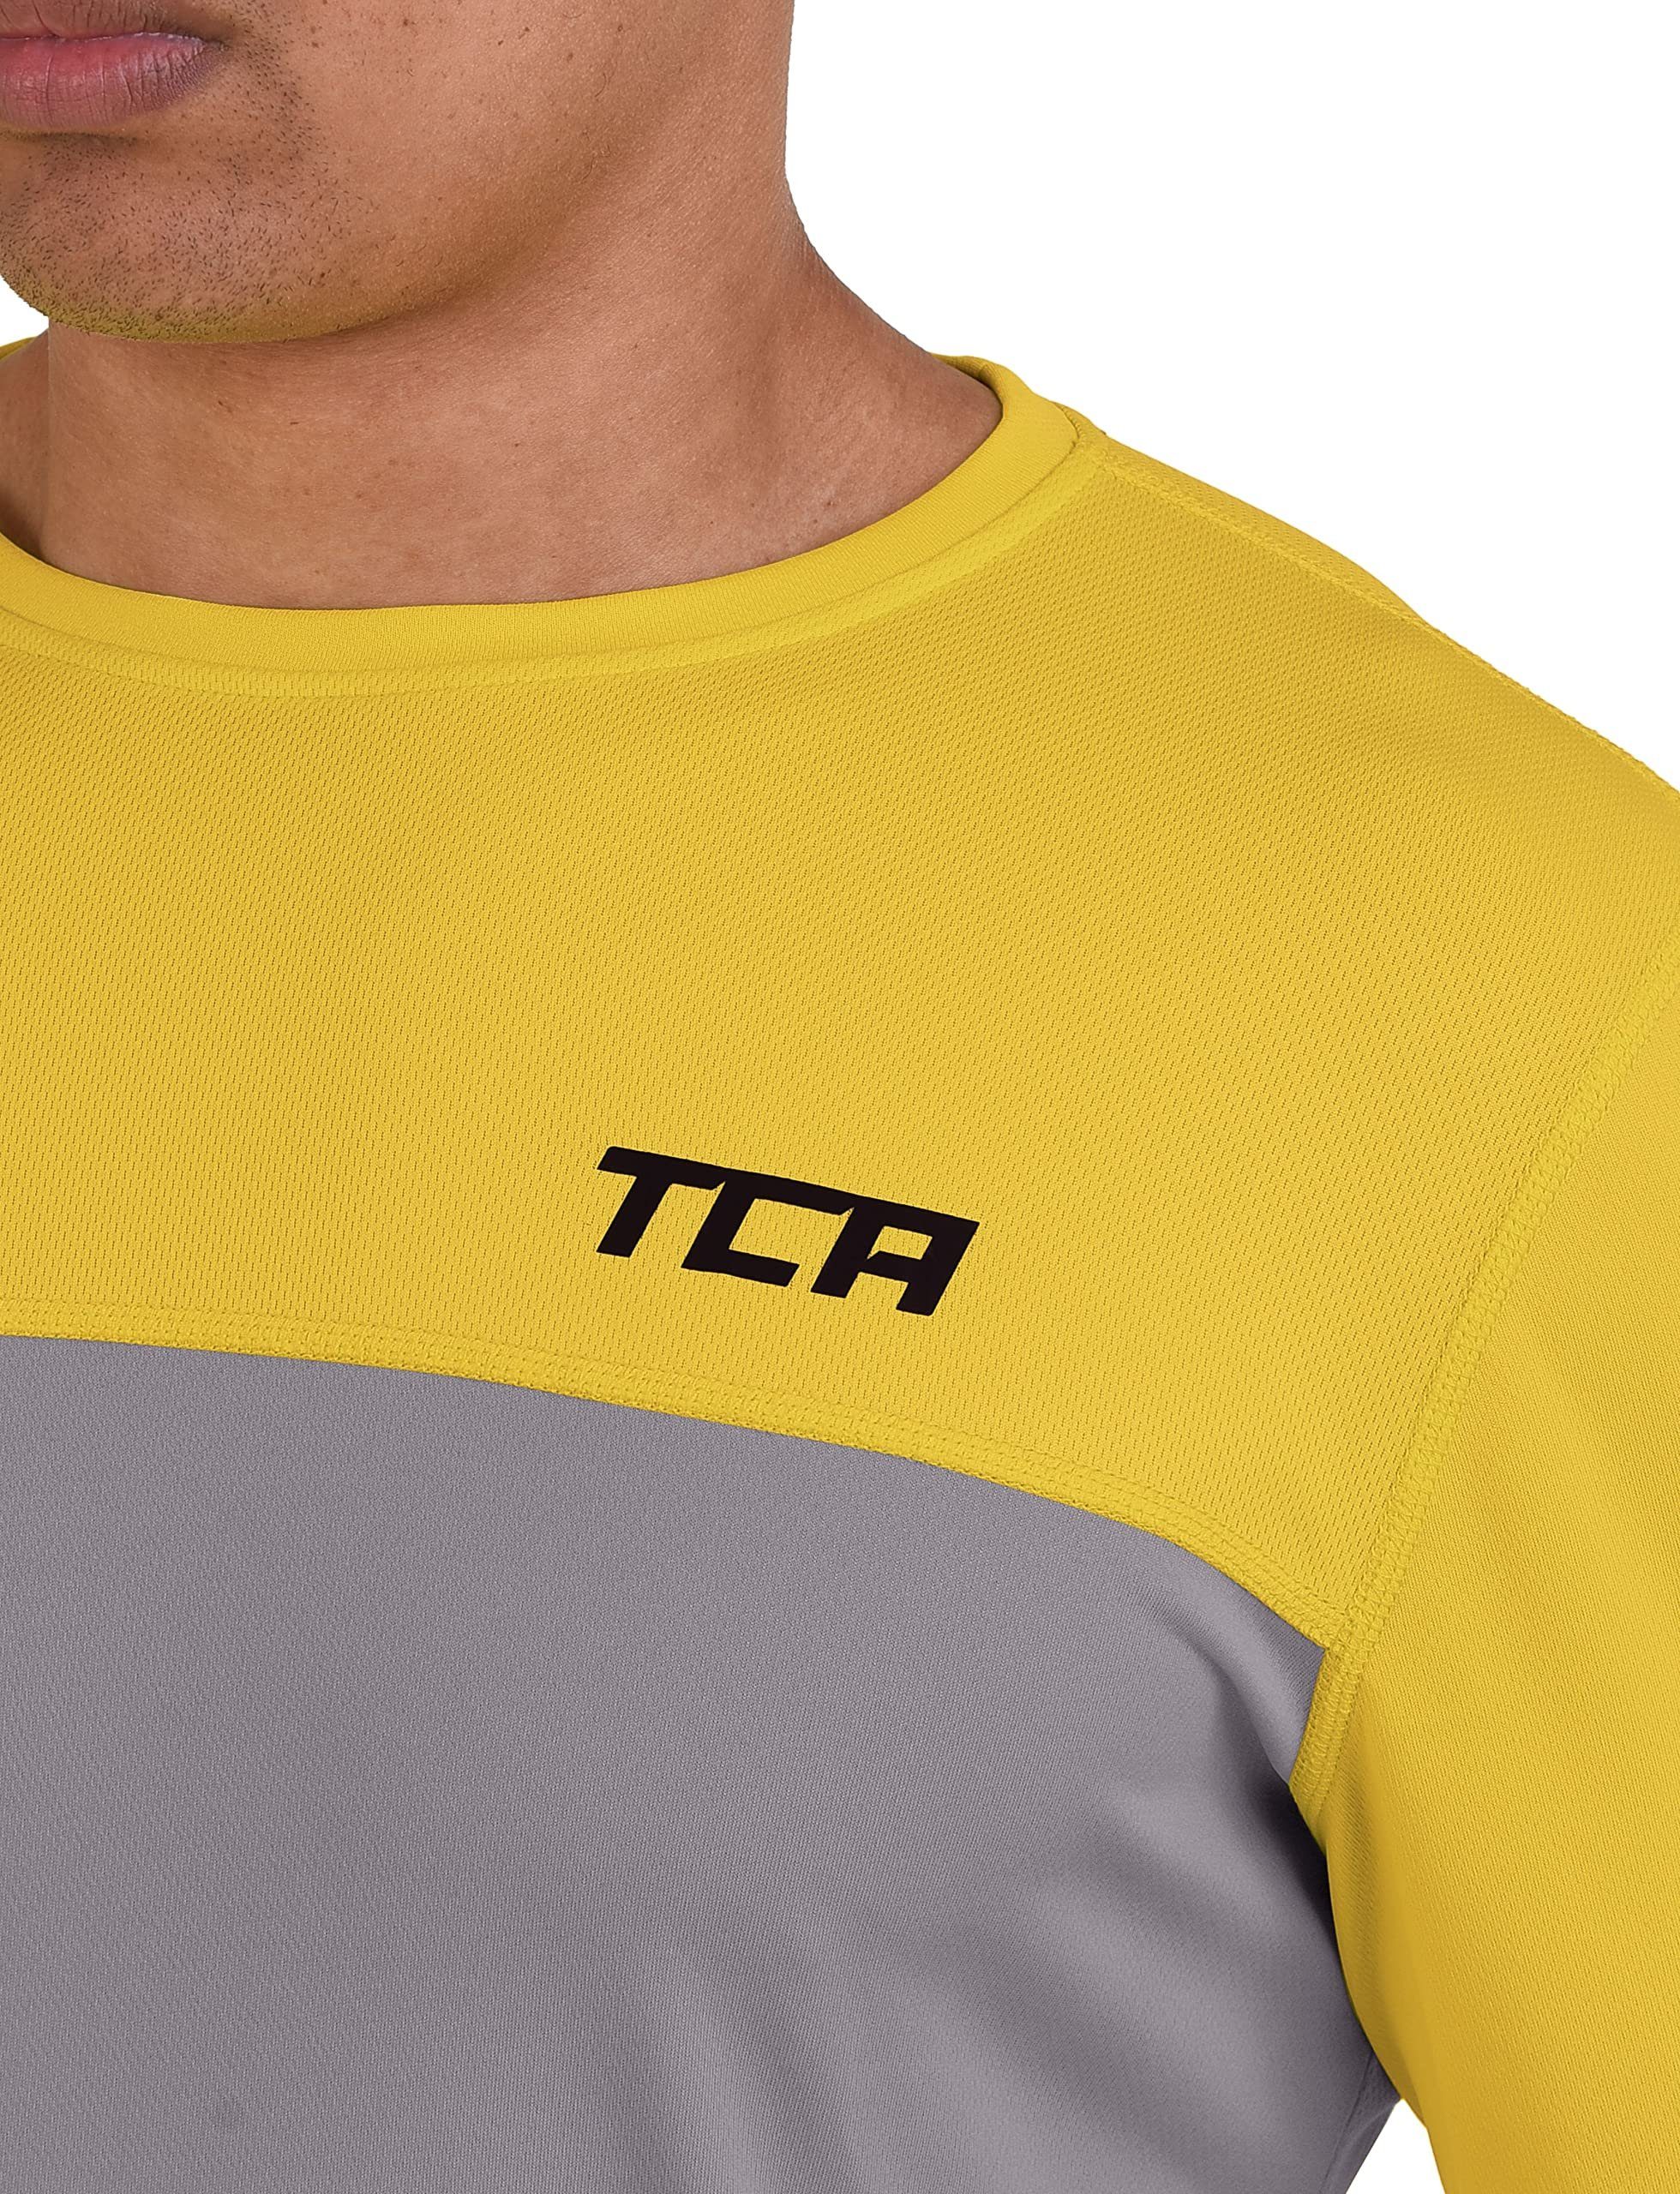 TCA - TCA Grau/Gelb Langarm Langarmshirt Laufshirt Herren